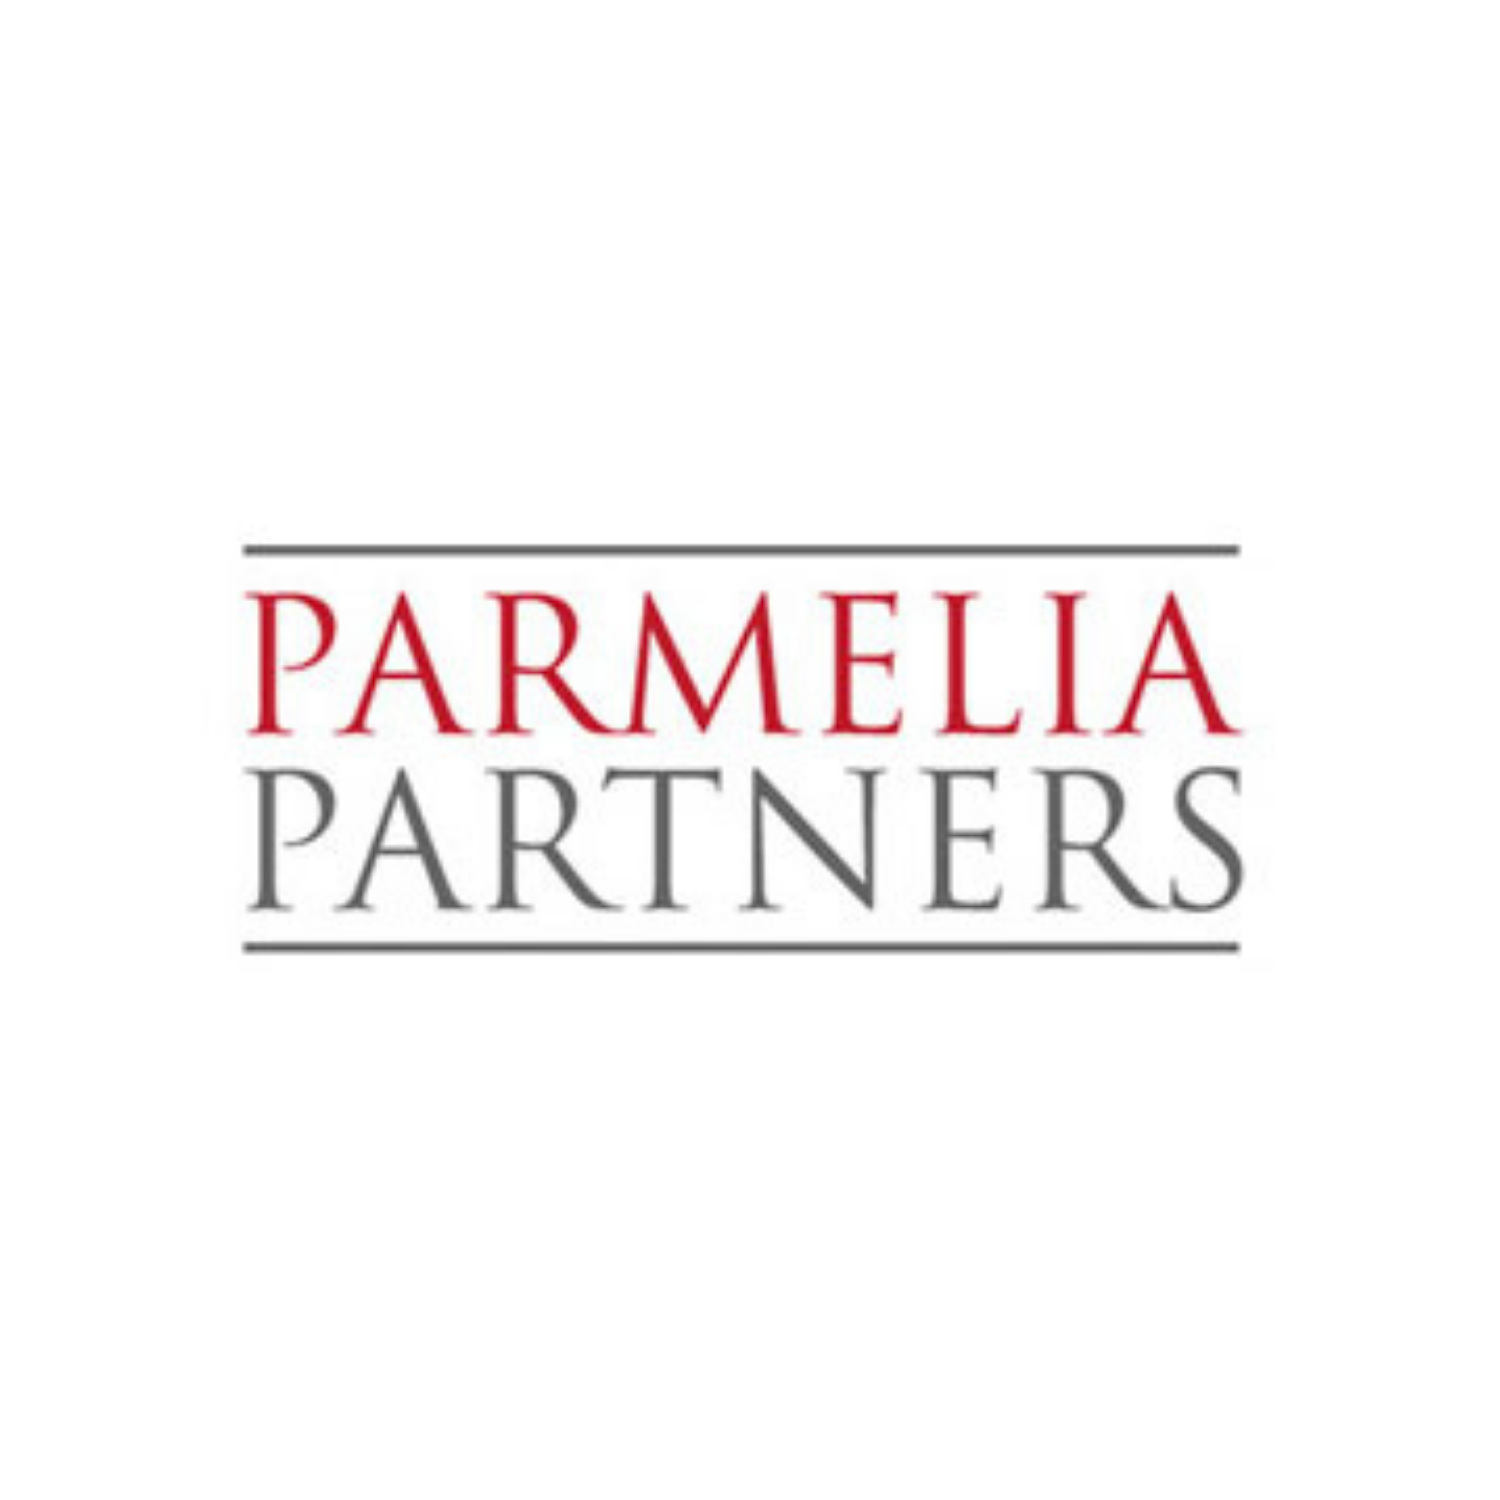 Partners Logos - 2021-08-03T120238.471.png